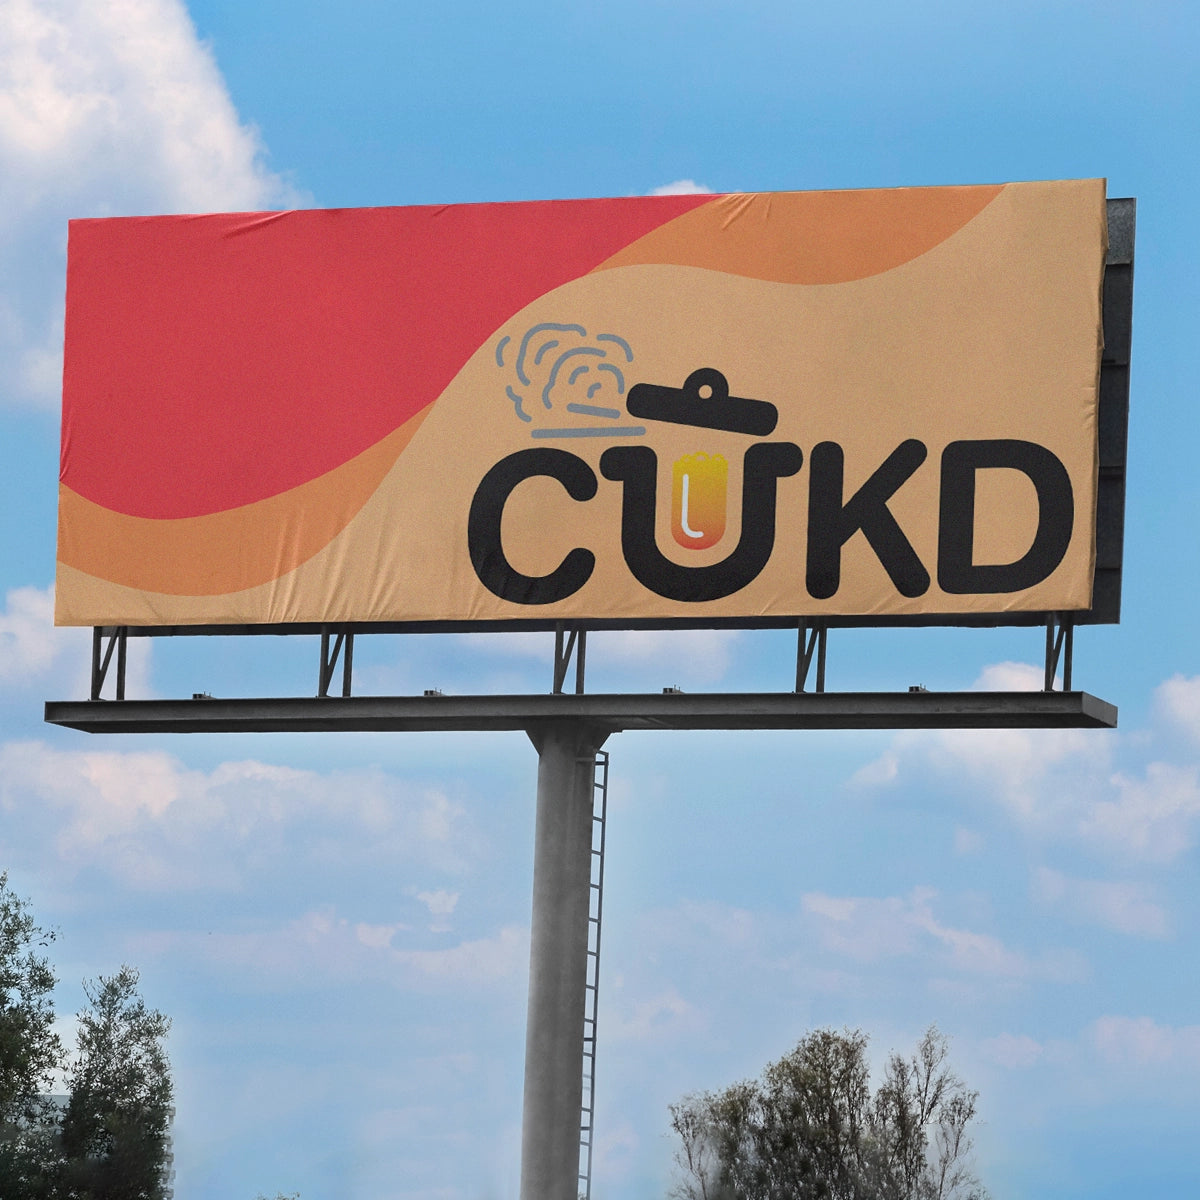 cukd.com